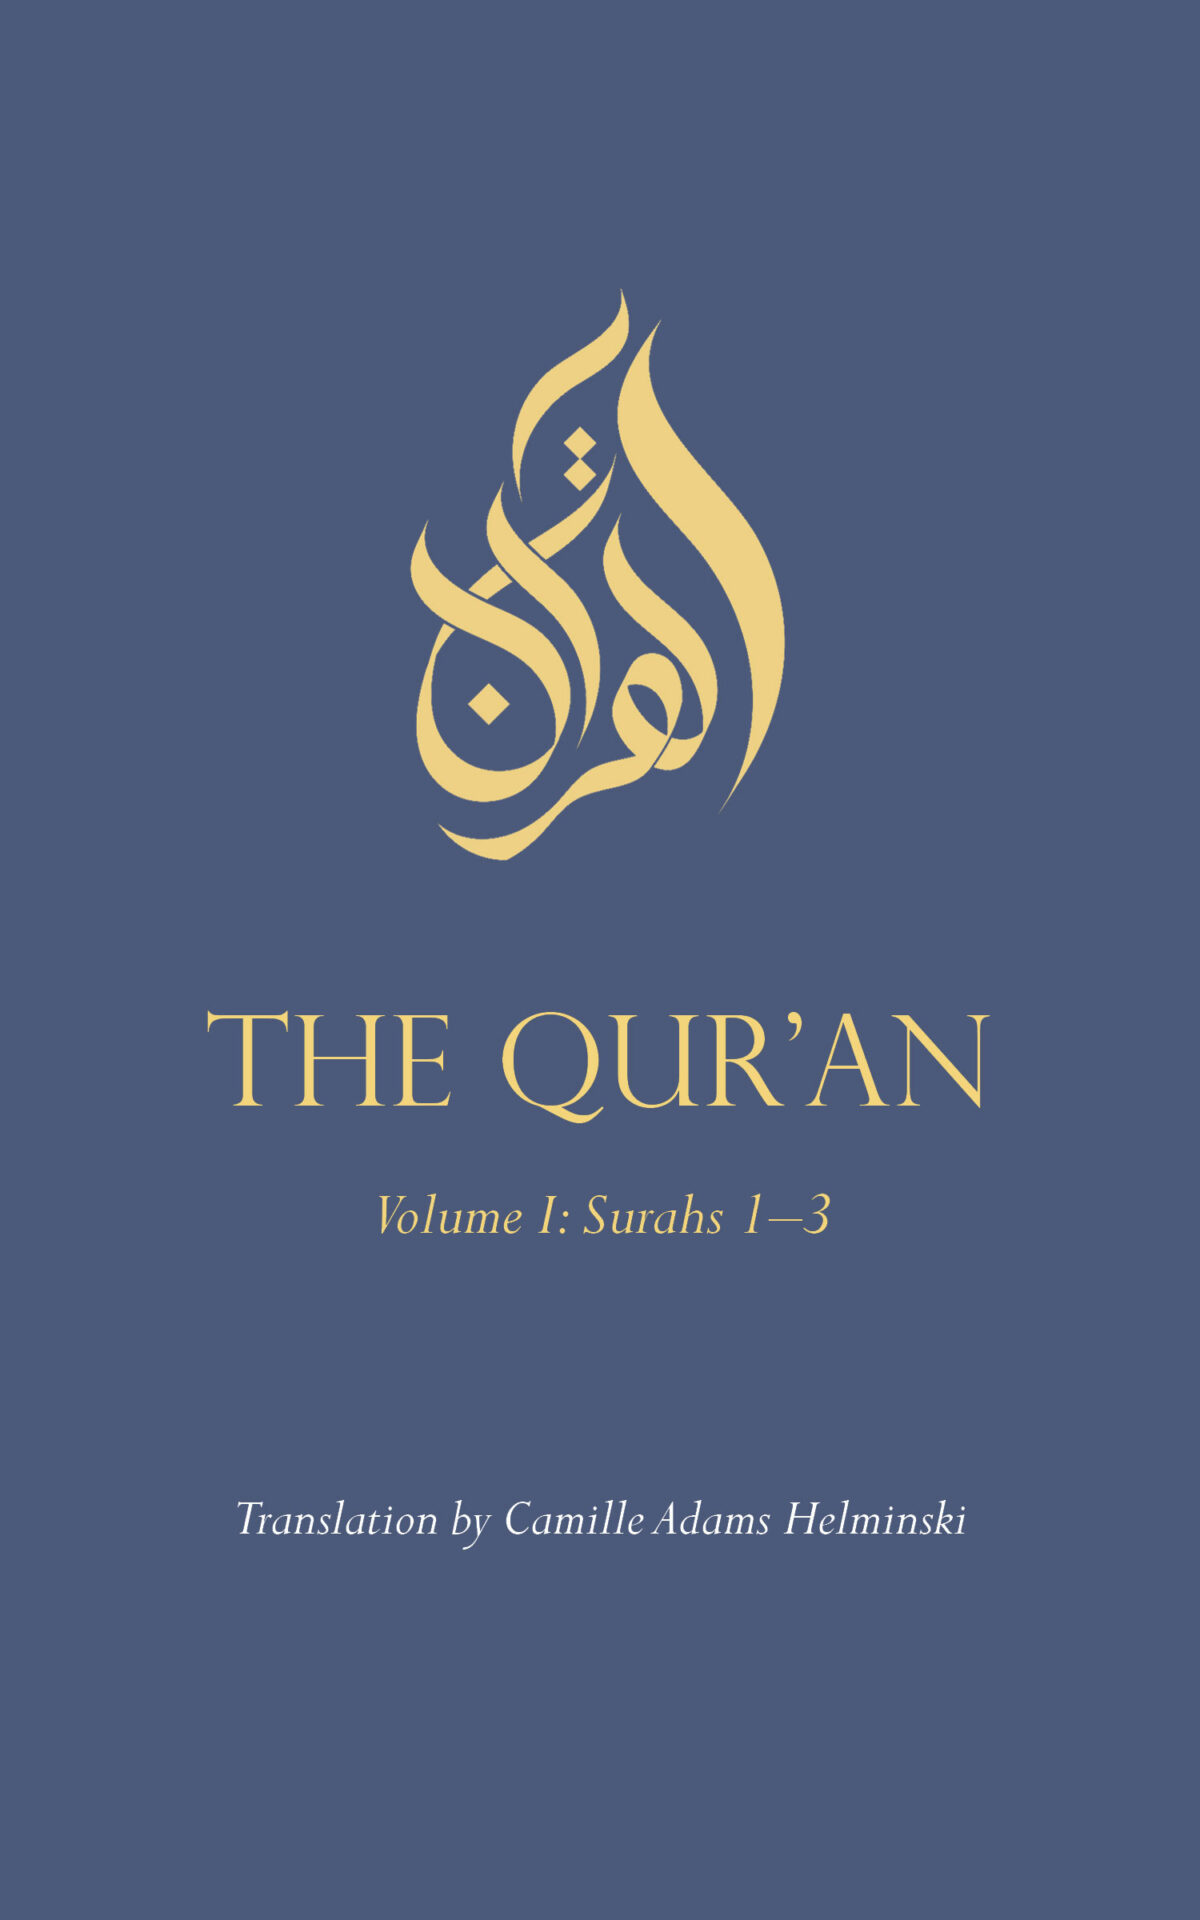 The Qur’an Volume 1: Surahs 1-3 - The Threshold Society